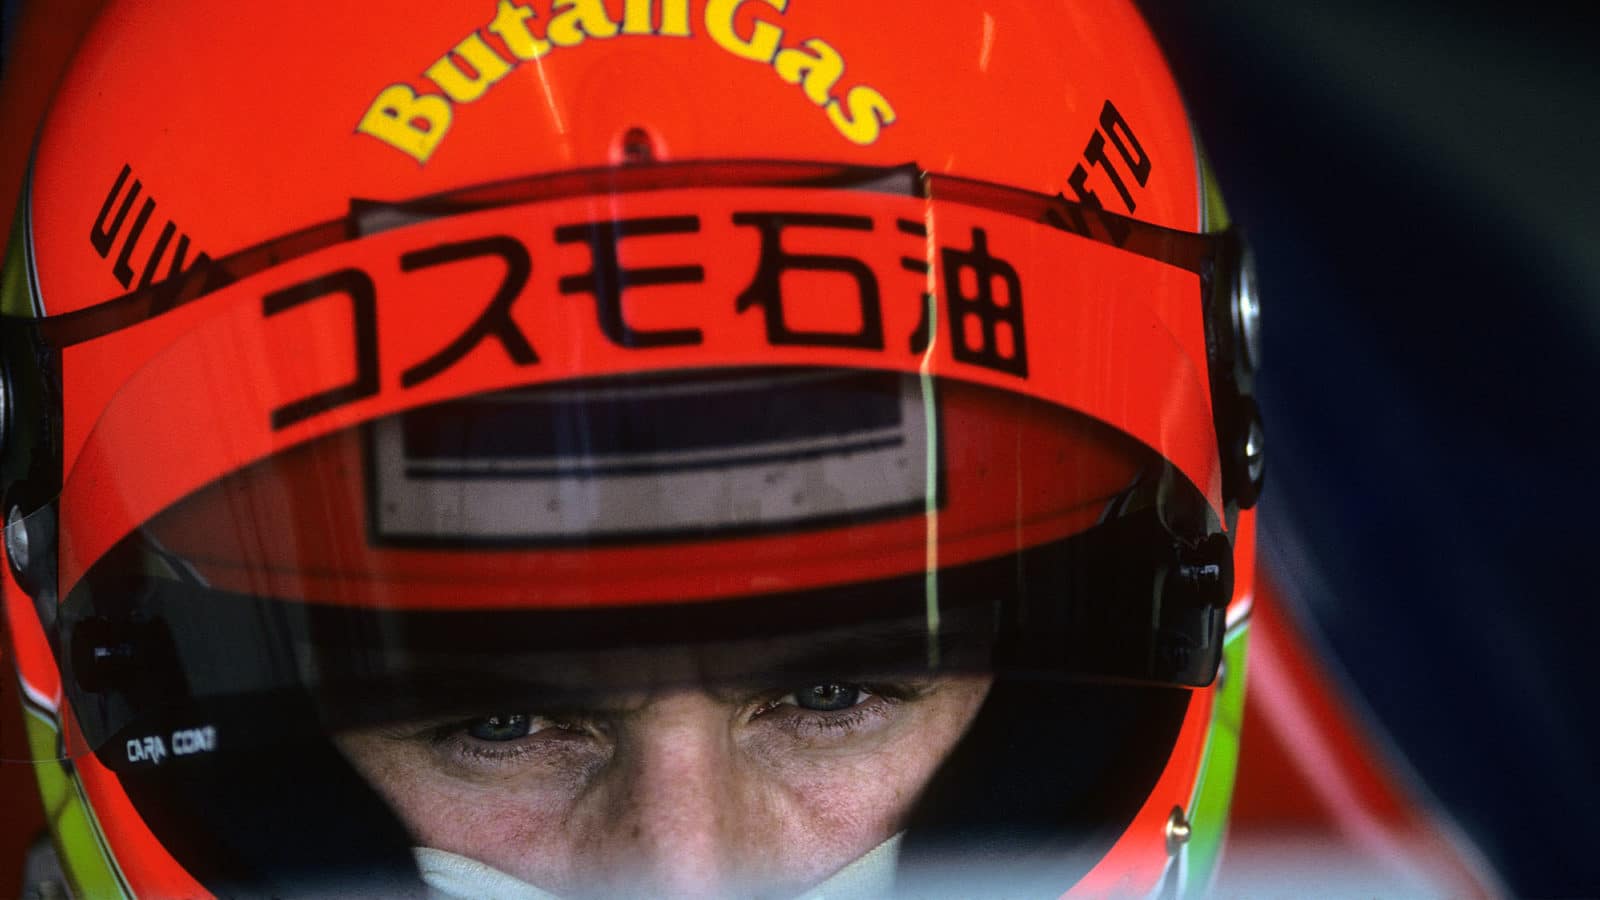 Eddie Irvine, Jordan-Hart 193, Grand Prix of Japan, Suzuka Circuit, 24 October 1993. (Photo by Paul-Henri Cahier/Getty Images)